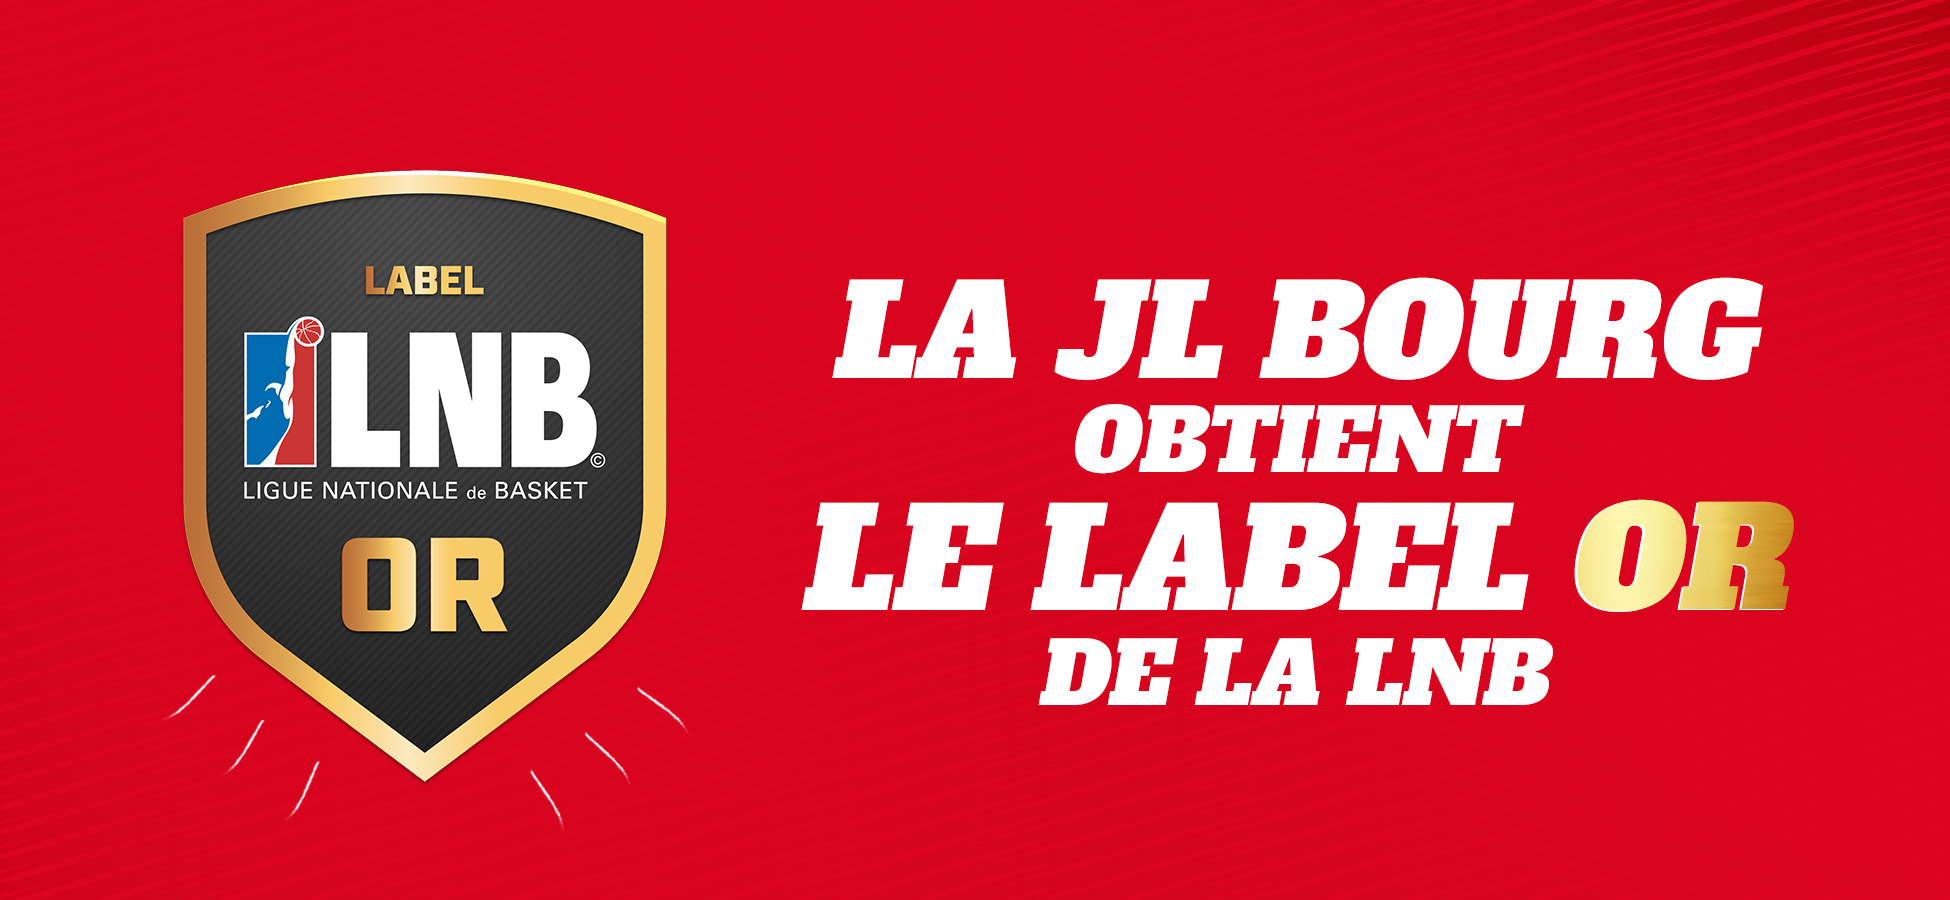 Le label Or pour la JL ! - JL Bourg <b>Basket</b>